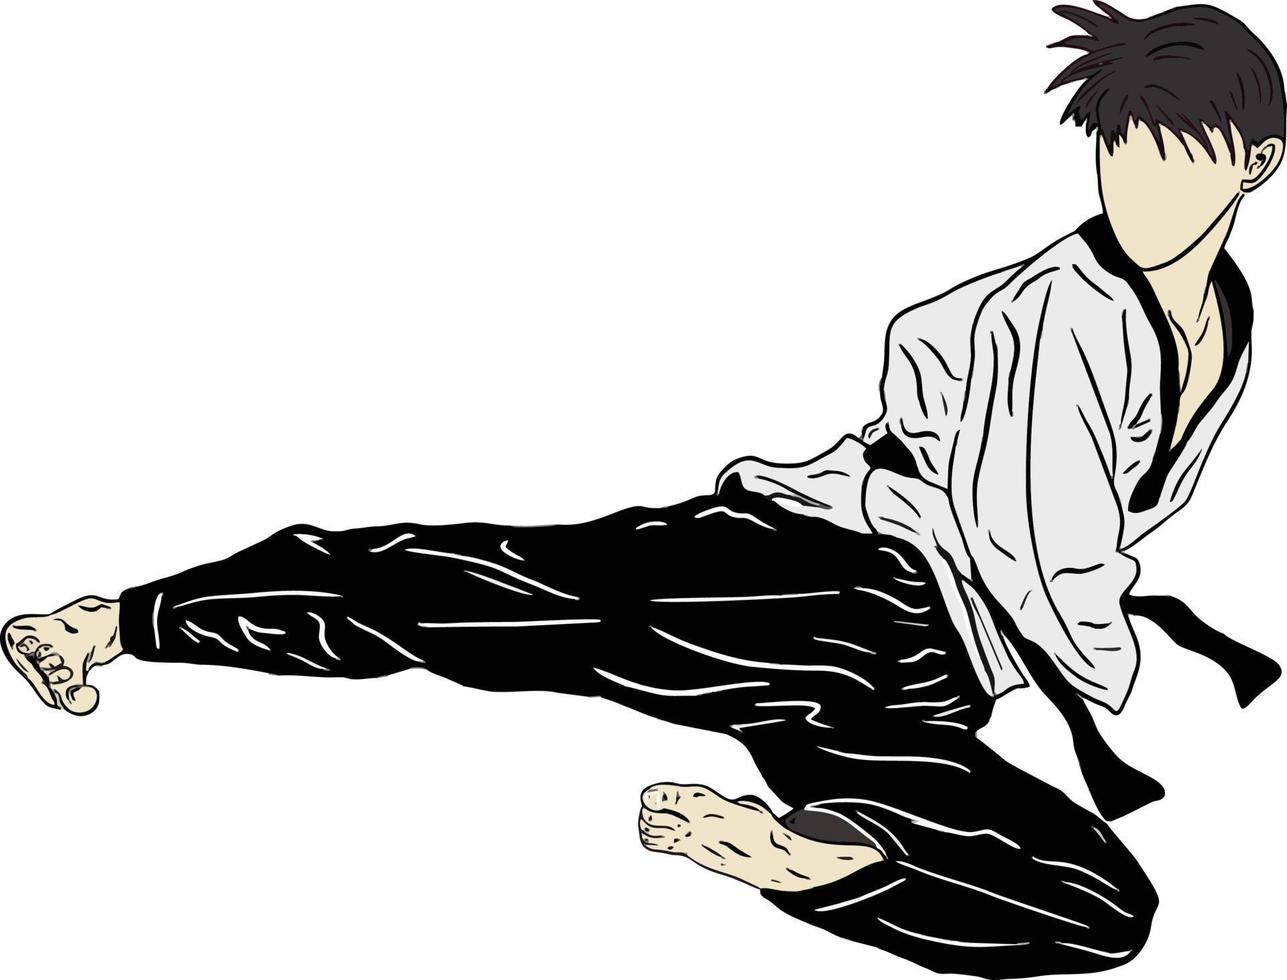 Taekwondo-Vektor-Kick-Pose und -Technik vektor